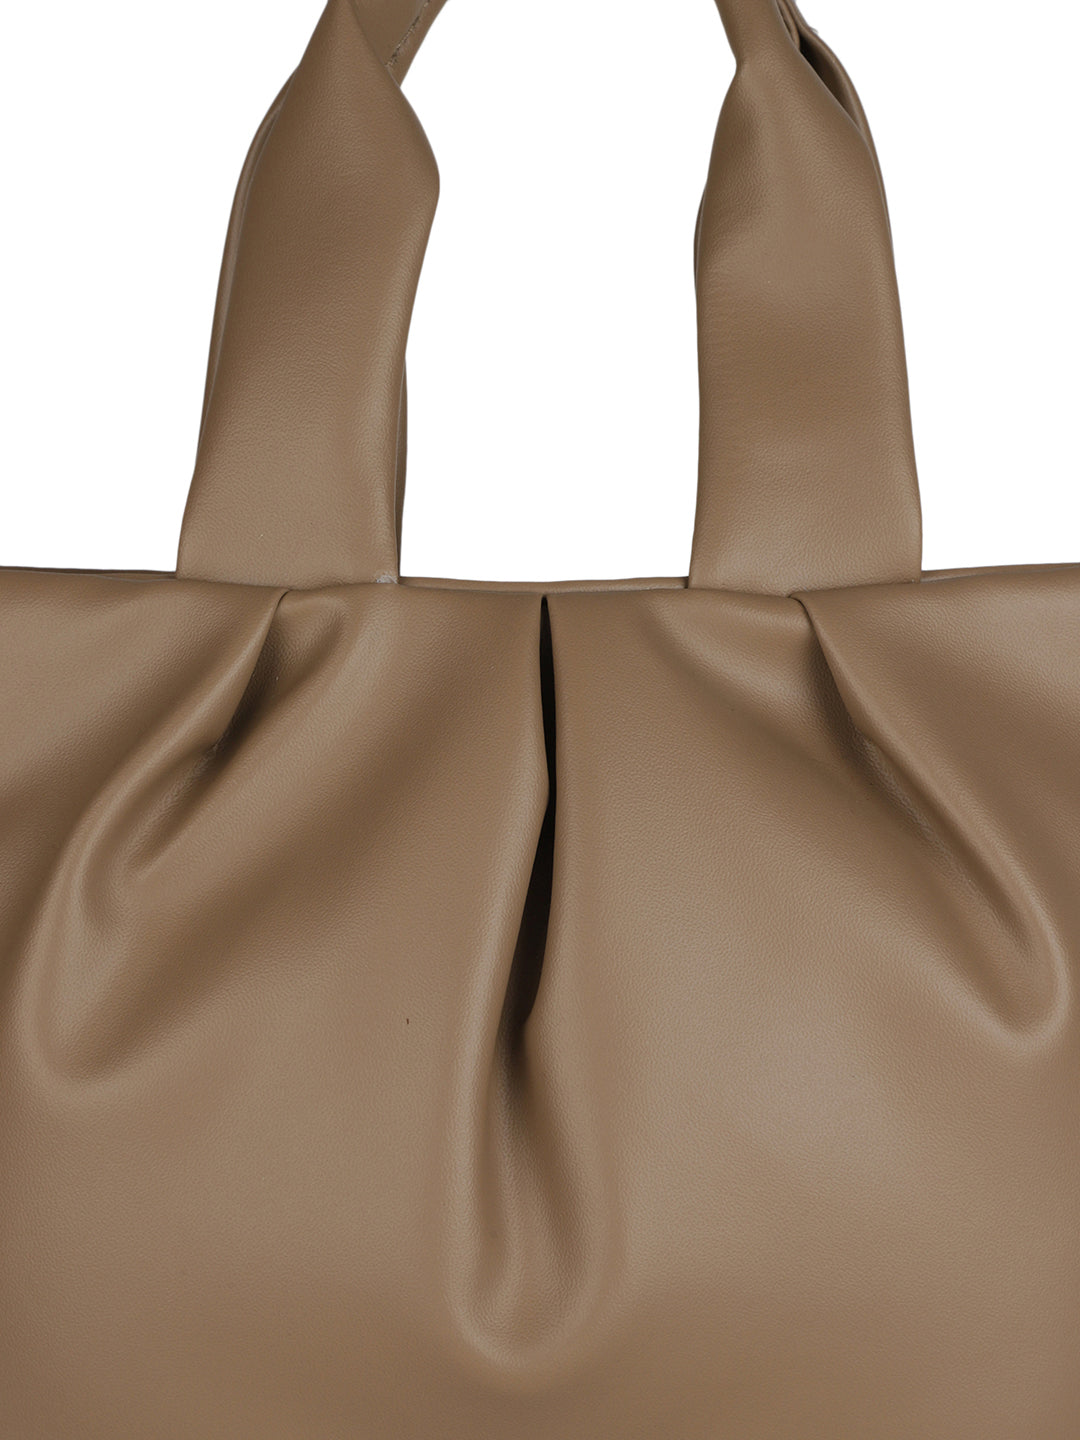 MINI WESST Brown Casual Solid Handheld Bag(MWHB183BR)